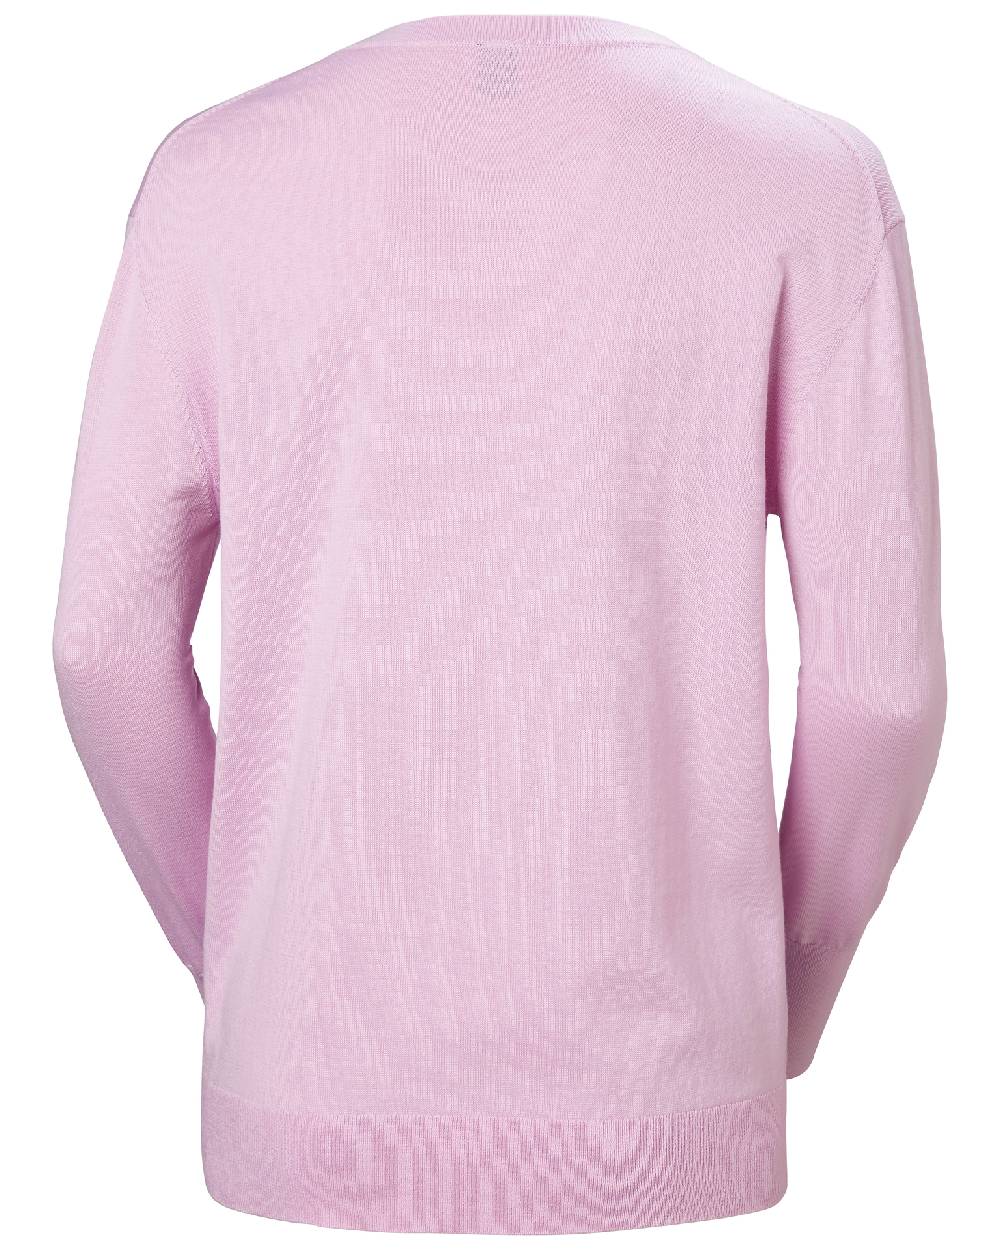 Cherry Blossom coloured Helly Hansen Womens Salt Summer Knit Sweater on white background 